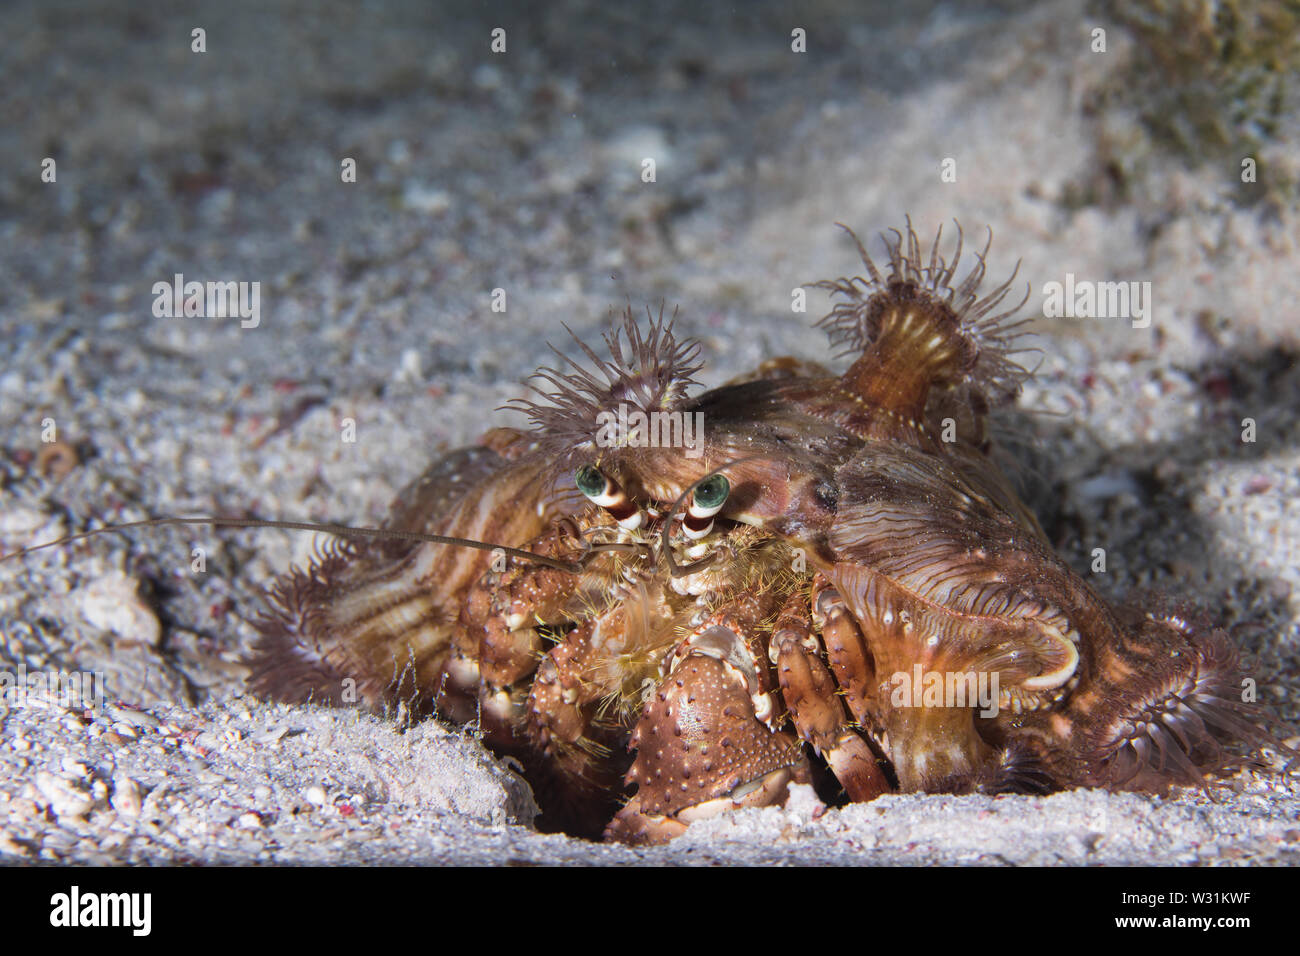 Red Sea anemone hermit crab (Dardanus tinctor) covered with Hermit Crab anemones (Calliactis polypus) on the sandy bottom. Stock Photo